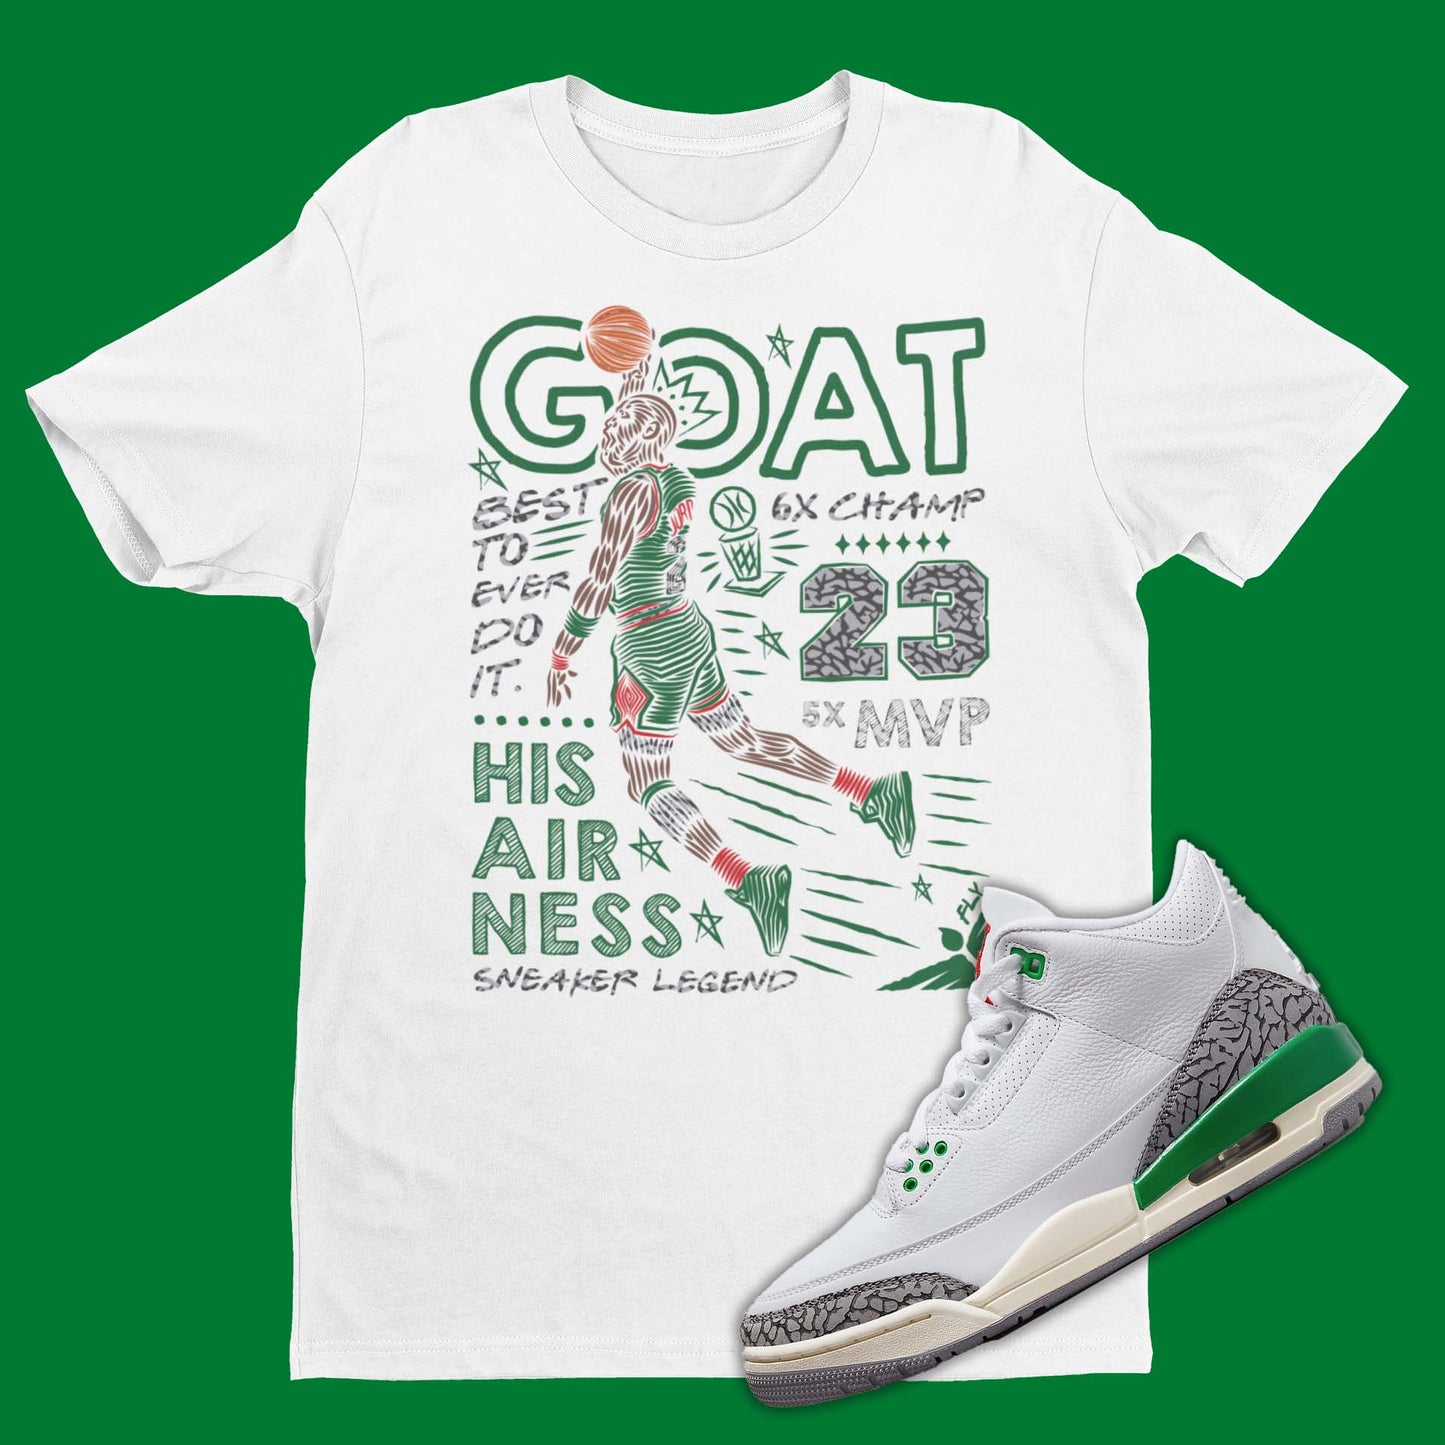 Air Jordan 3 Lucky Green Matching T-Shirt with Michael Jordan Dunking on the front